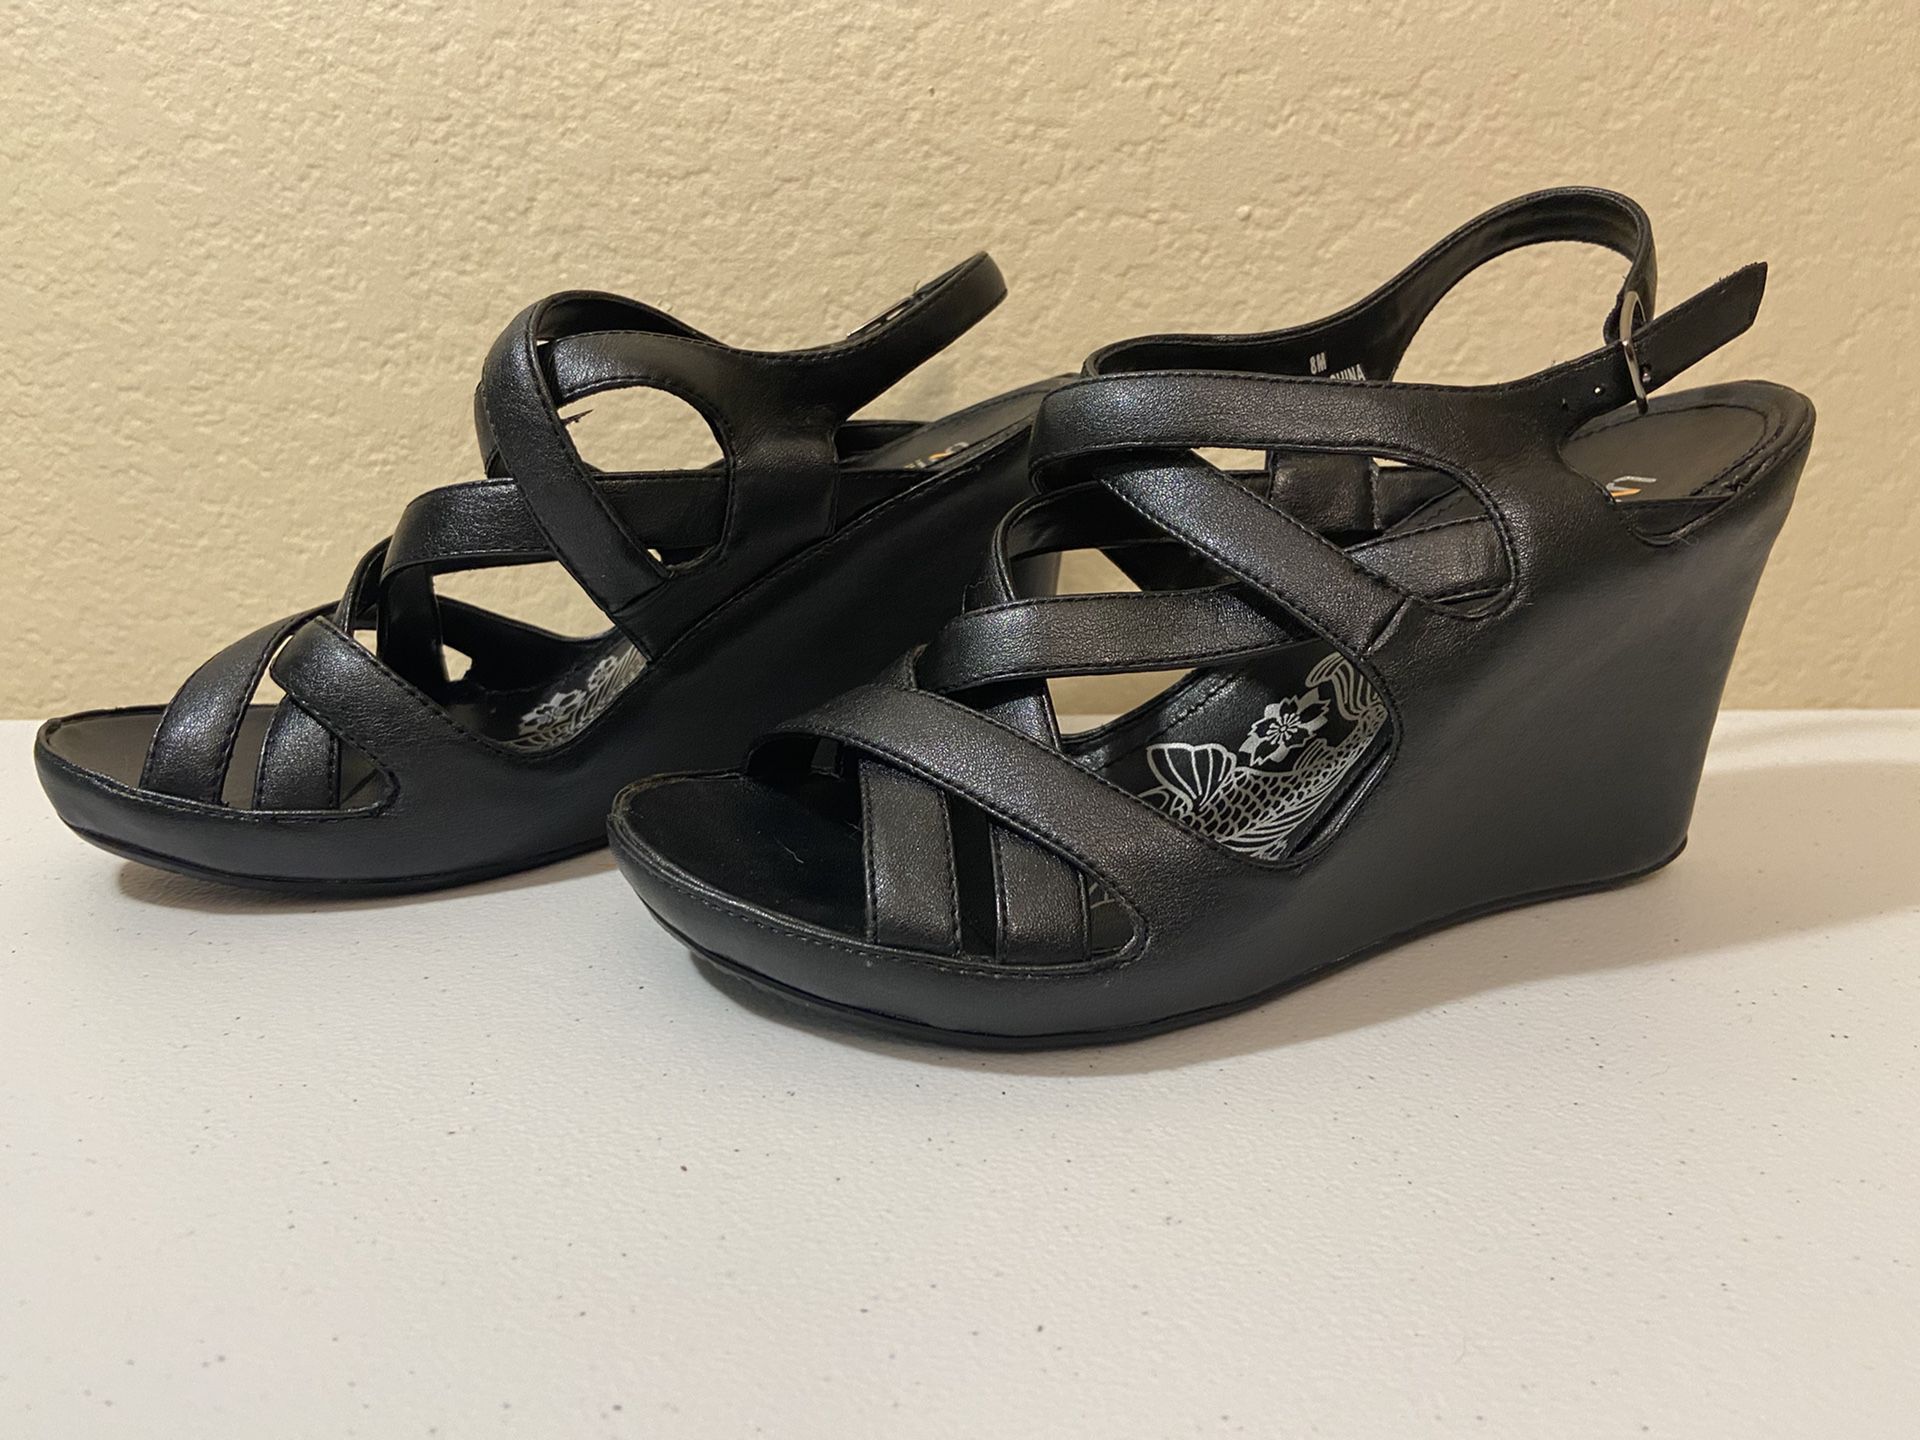 Unlisted Brand Black Wedge Sandals/heels- Women’s Size 8